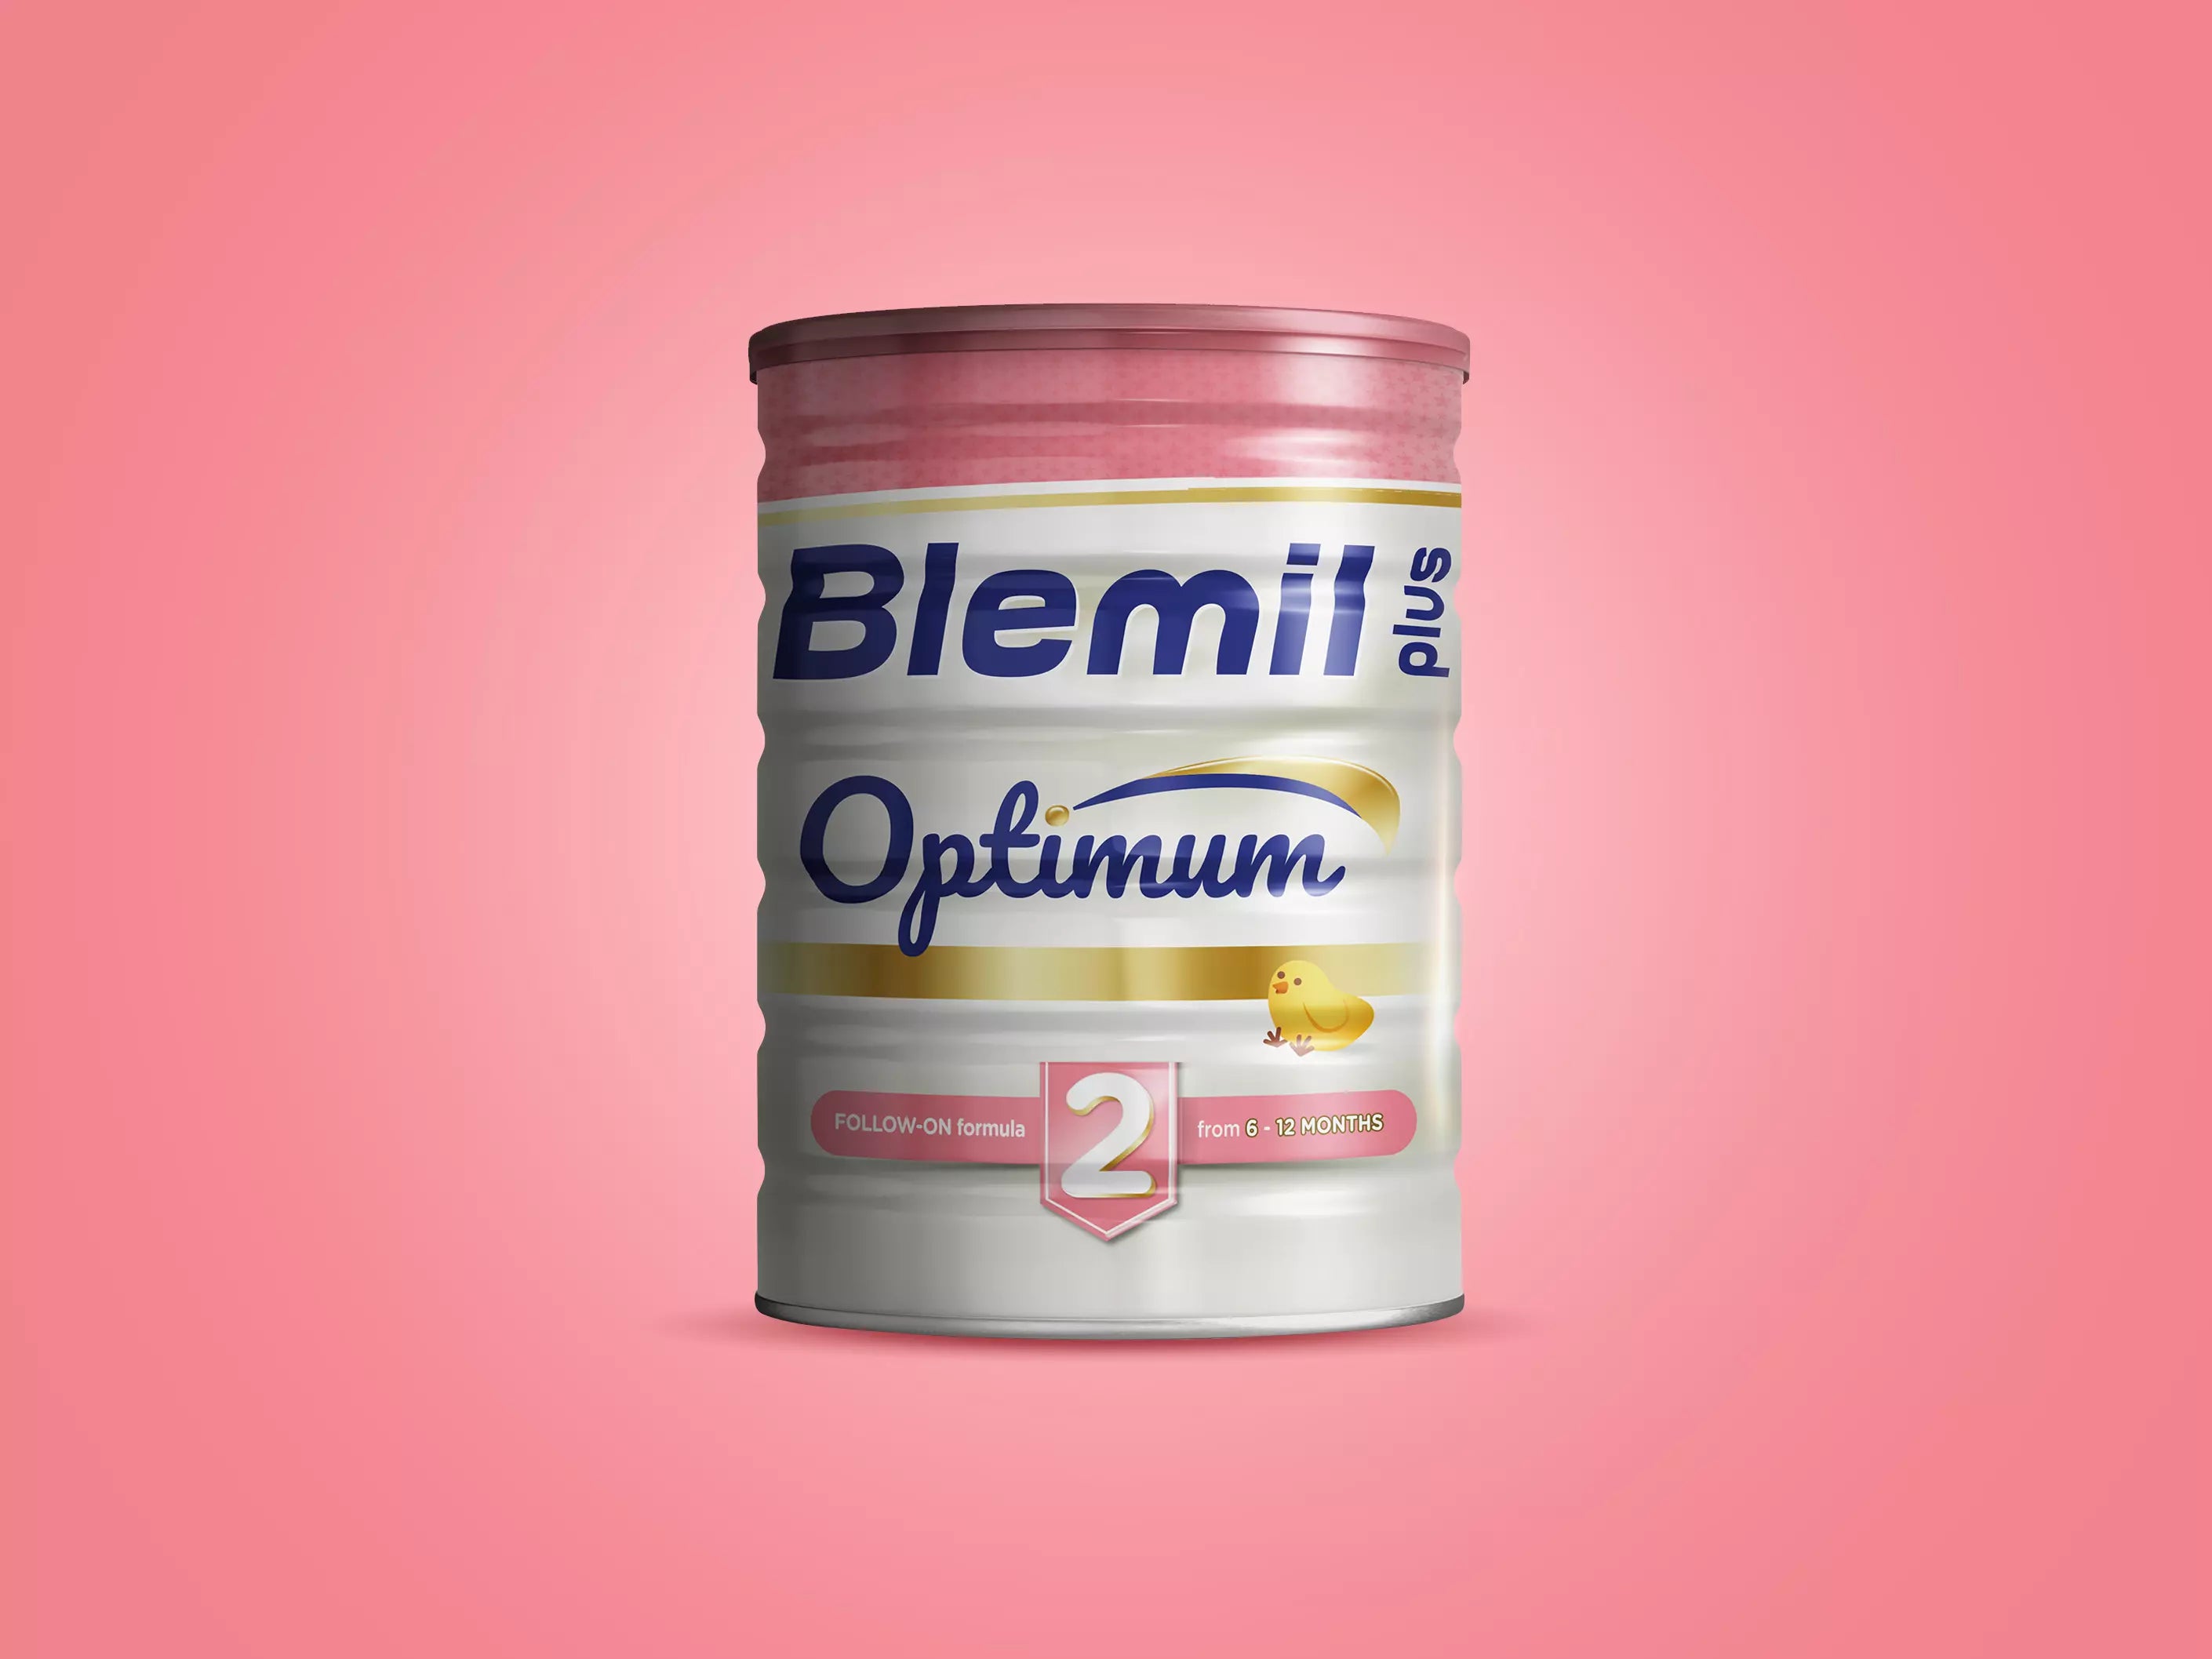 BLEMIL Optimum 3 Growth Dairy Preparation 800g